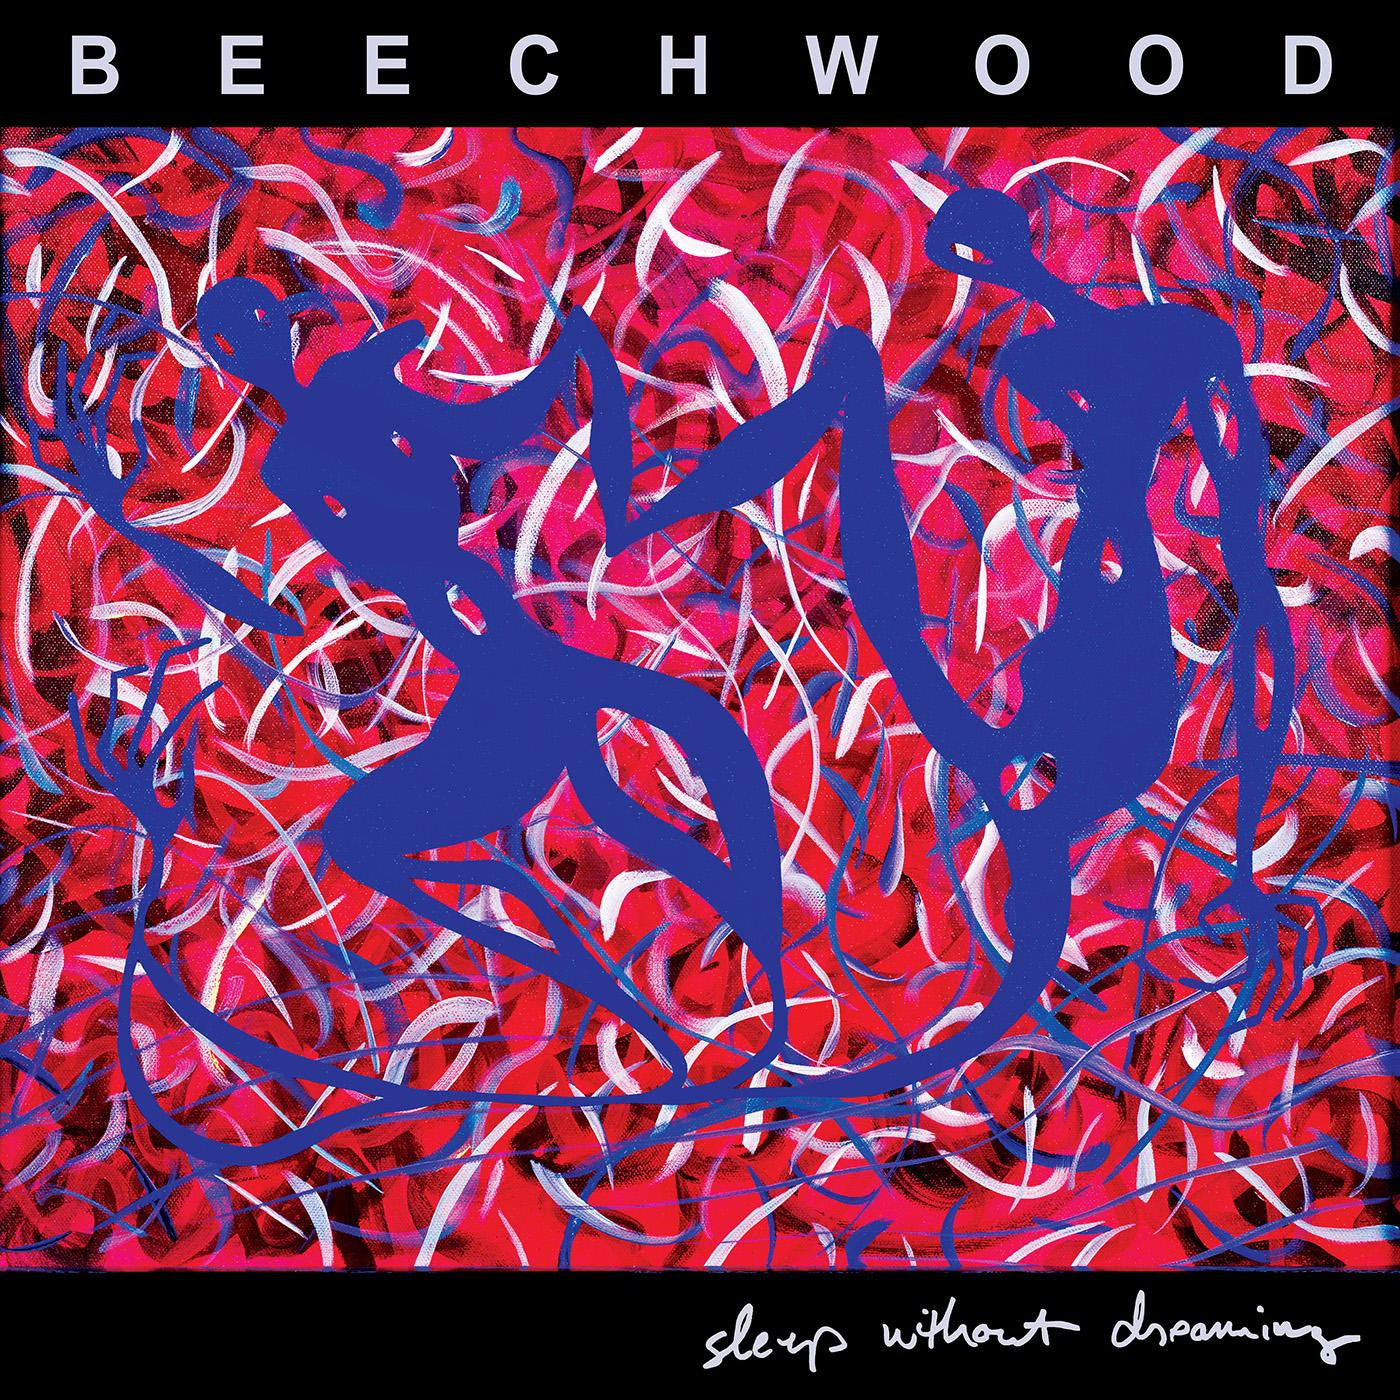 Beechwood - Sleep Without Dreaming (Vinyl LP)